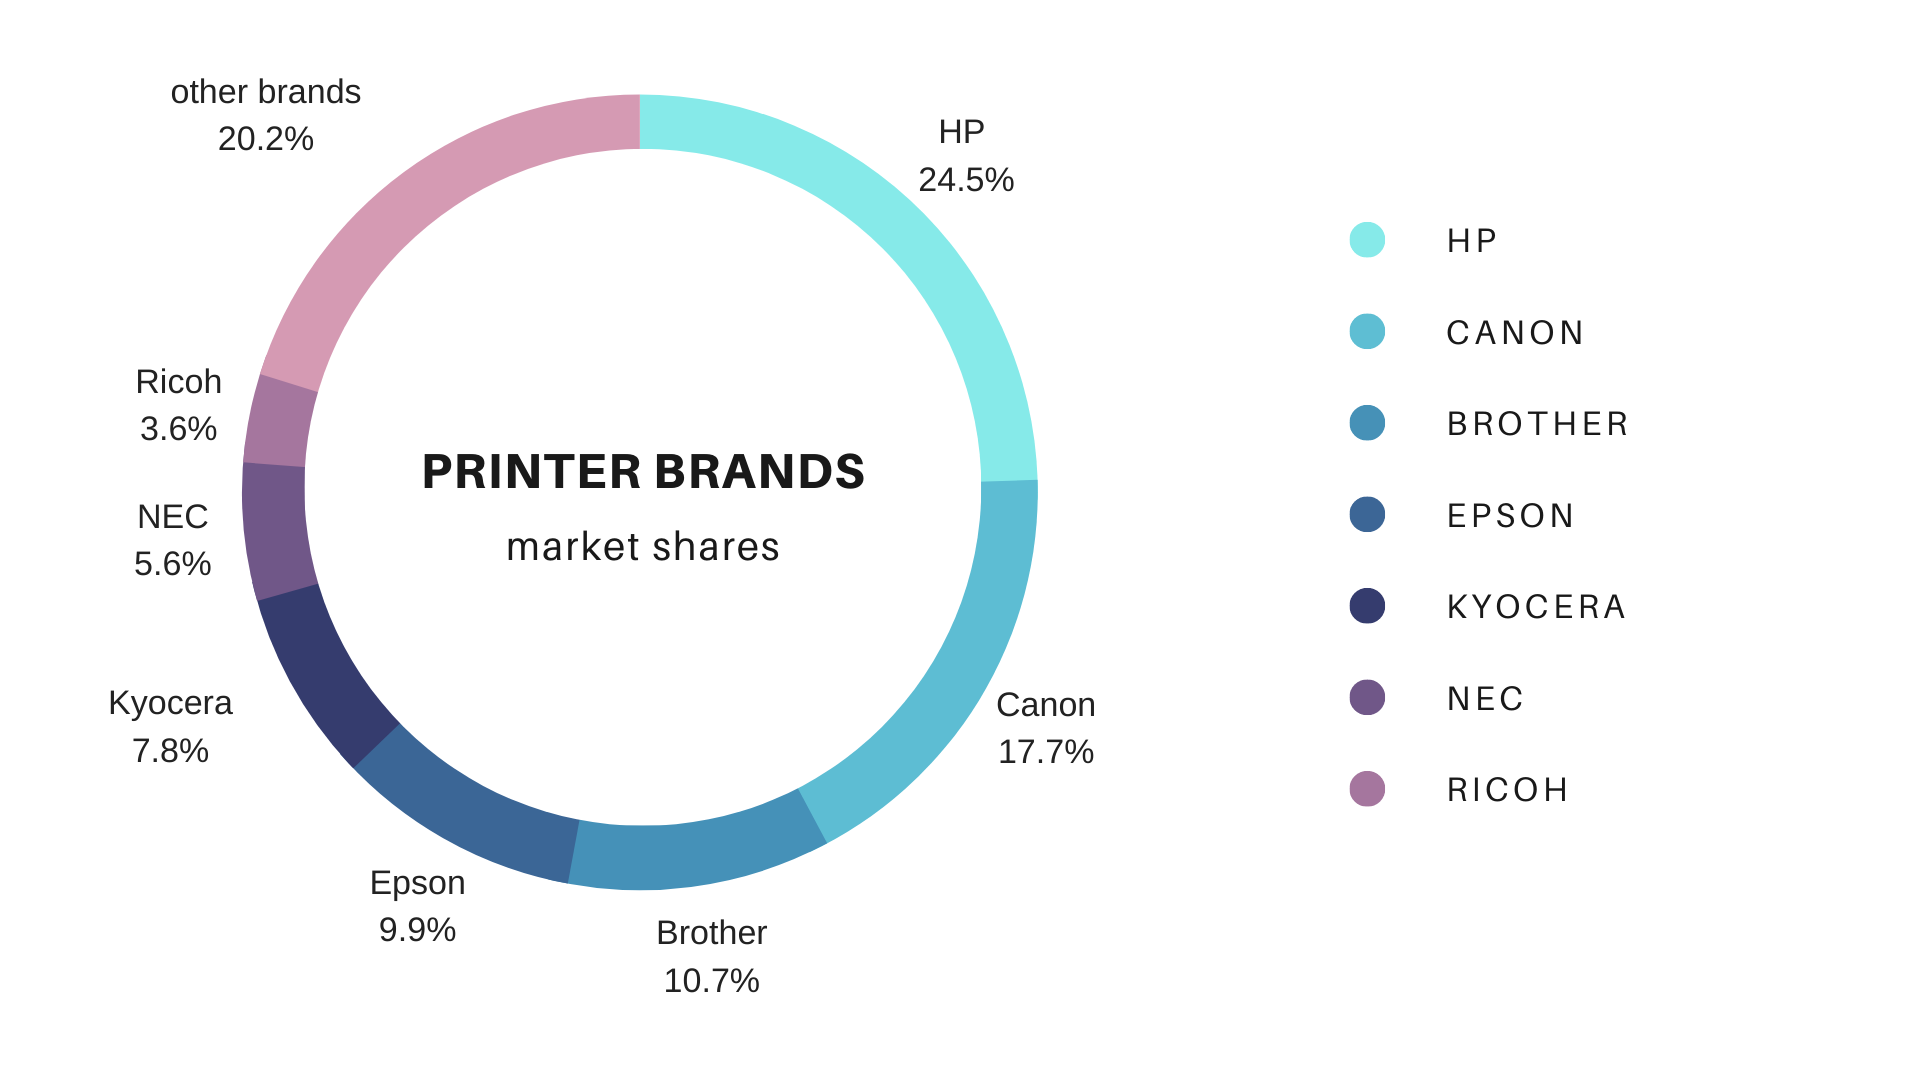 Printer brands market share